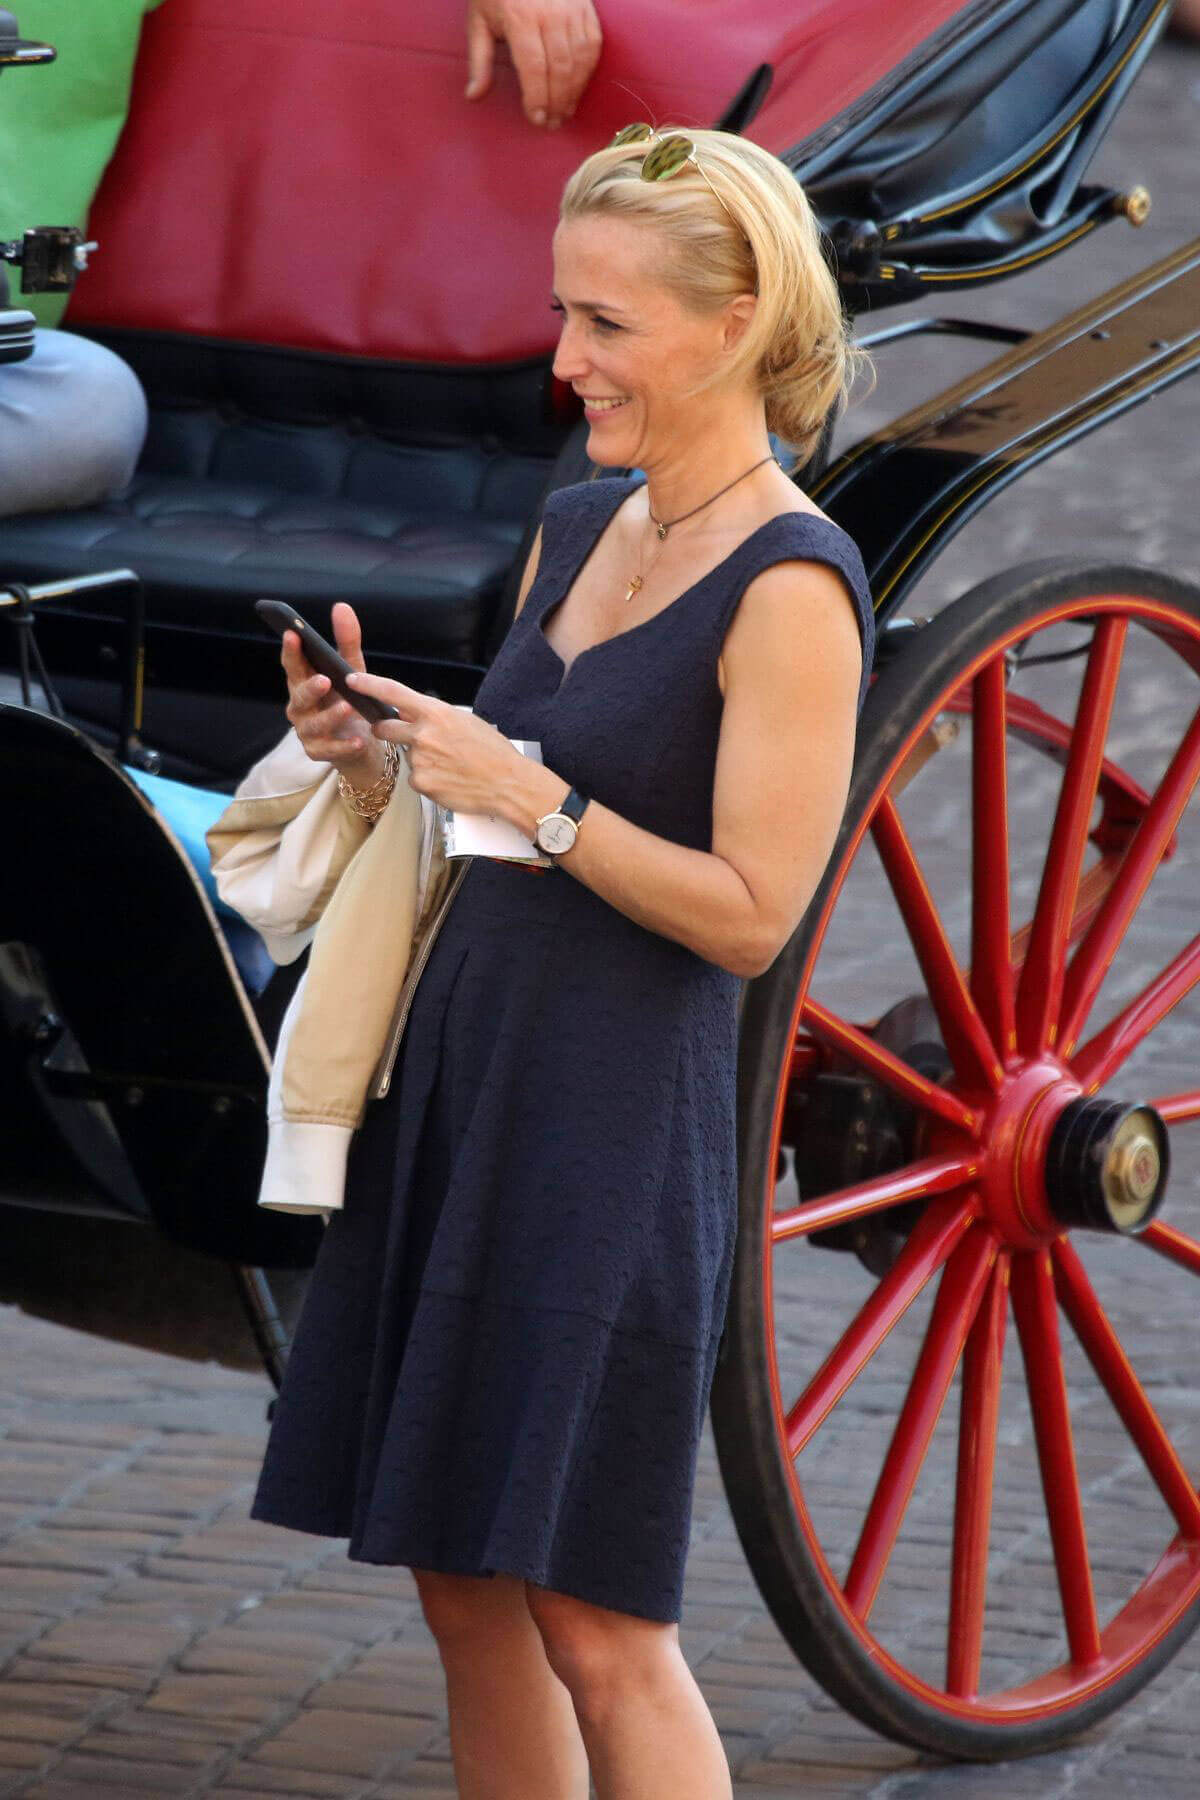 Gillian Anderson Stills on Vacation in Rome Photos